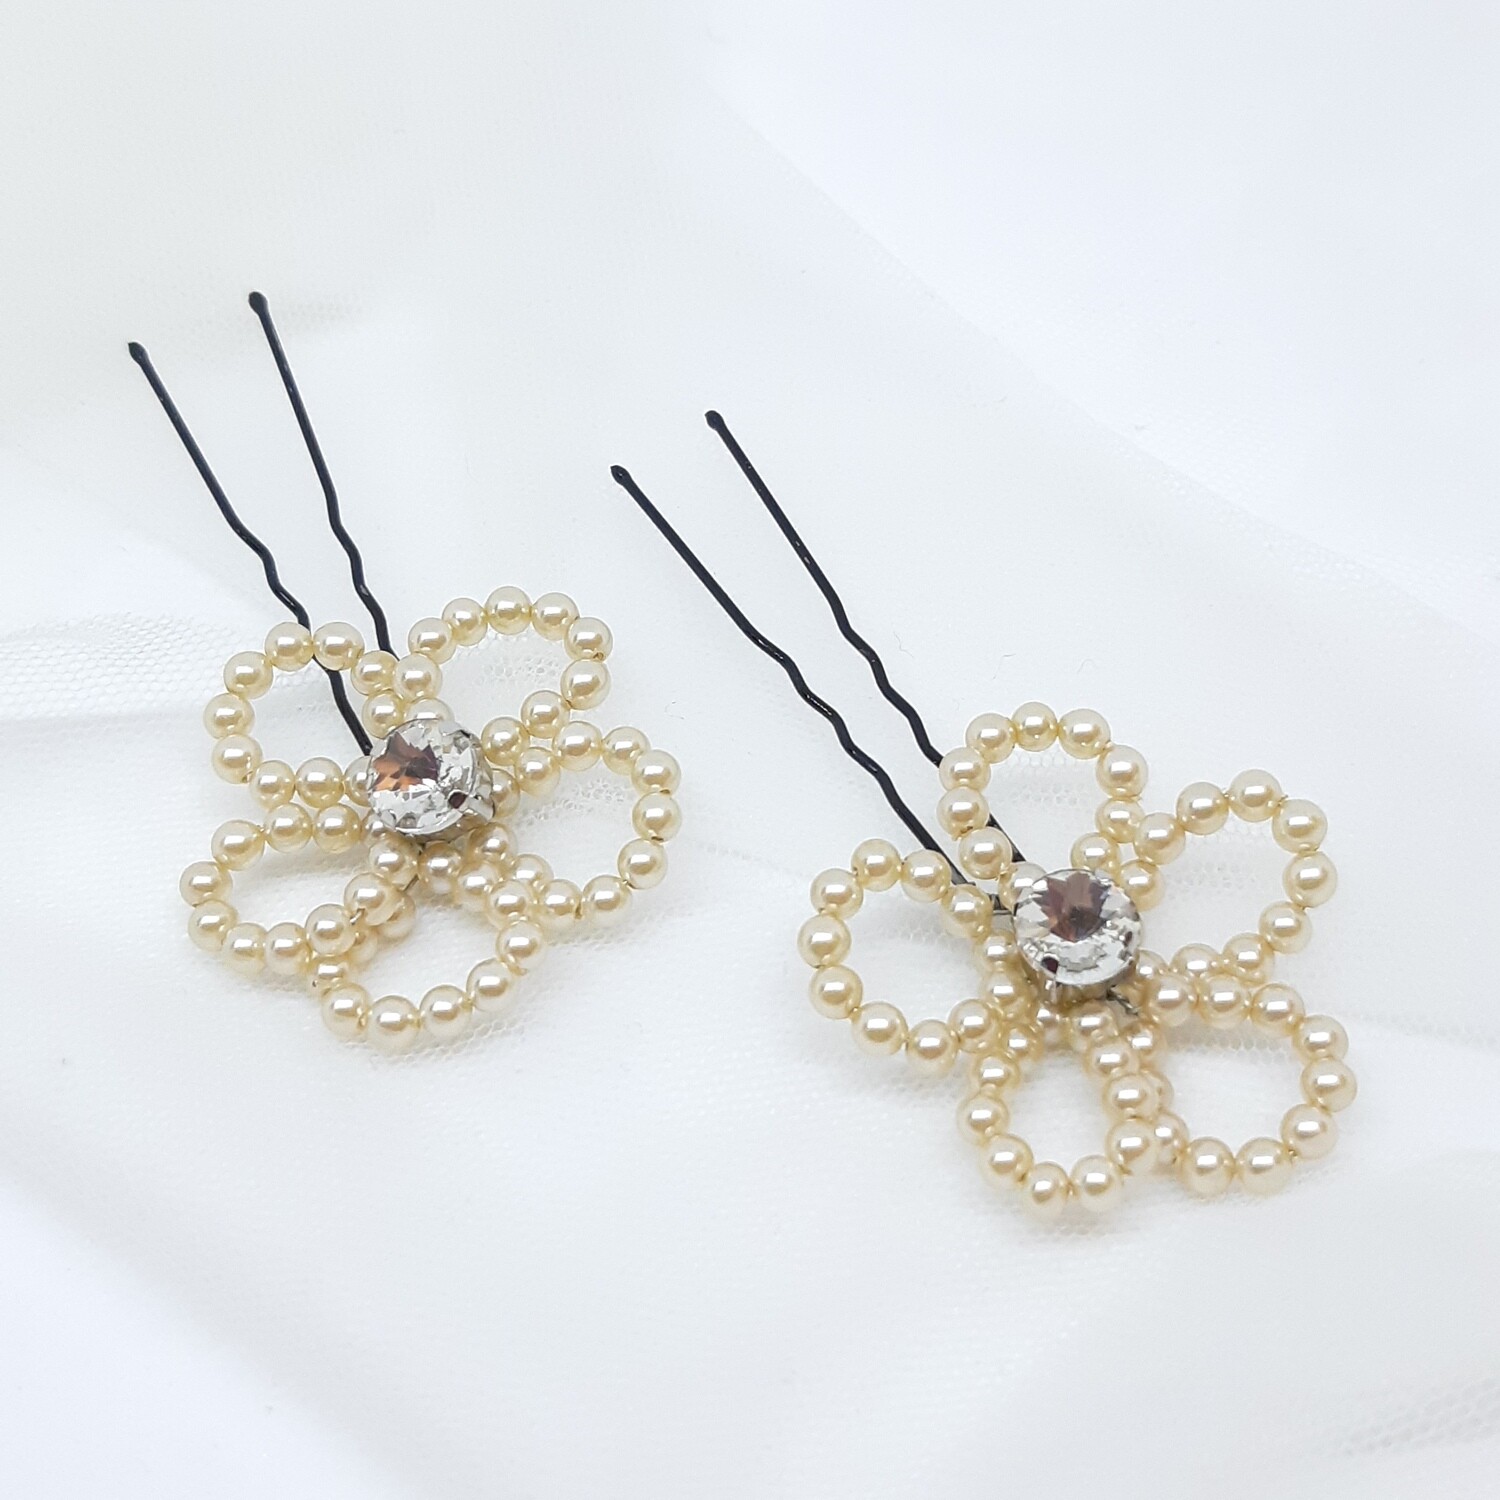 Haarpins - set van 2 pins - bloem in parels en strass